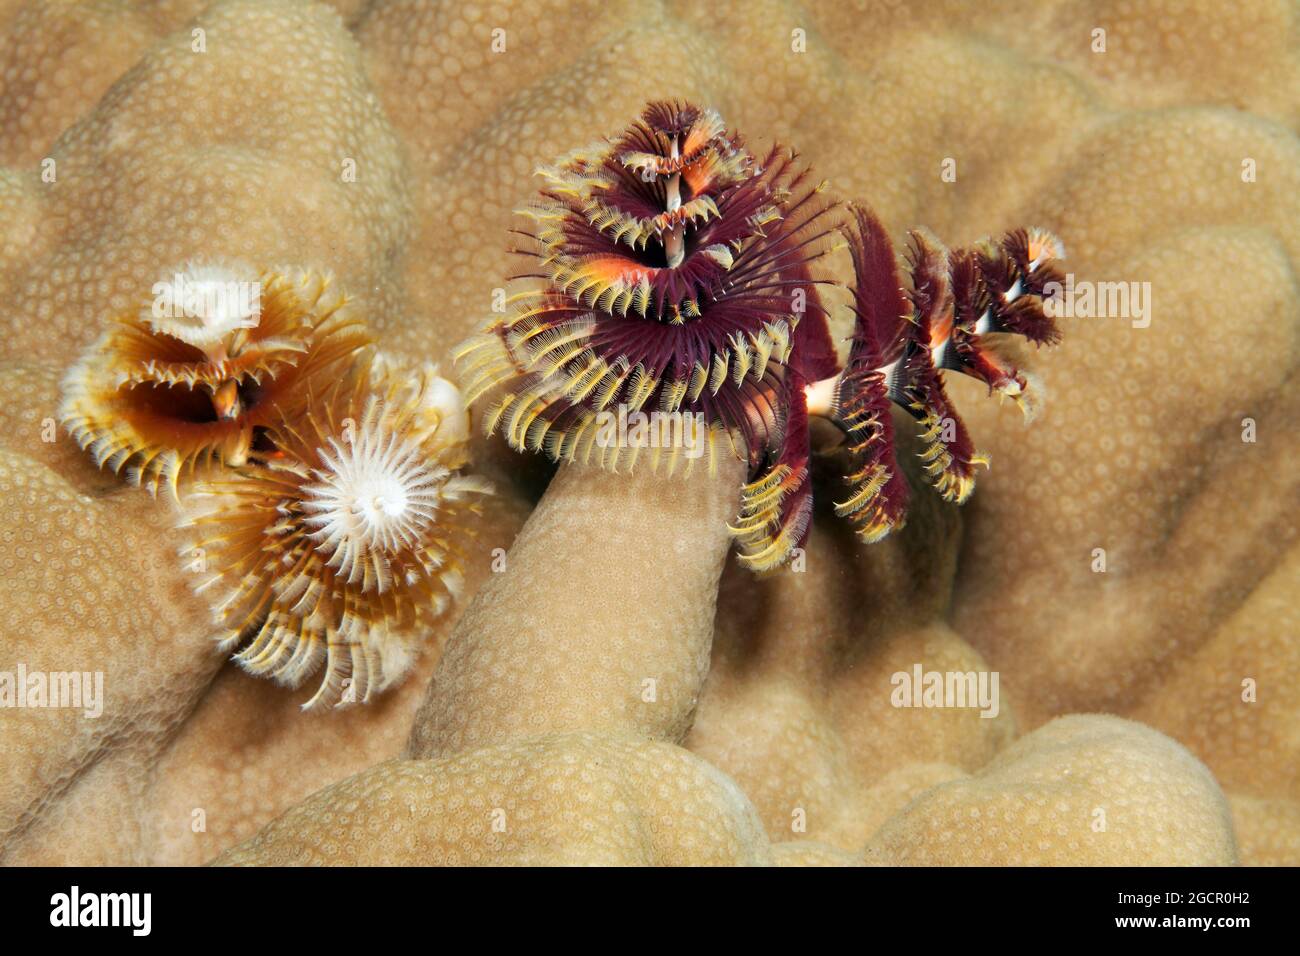 Two, Christmas tree worm (Spirobranchus giganteus) on stone coral (Porites), Red Sea, Aqaba, Kingdom of Jordan Stock Photo